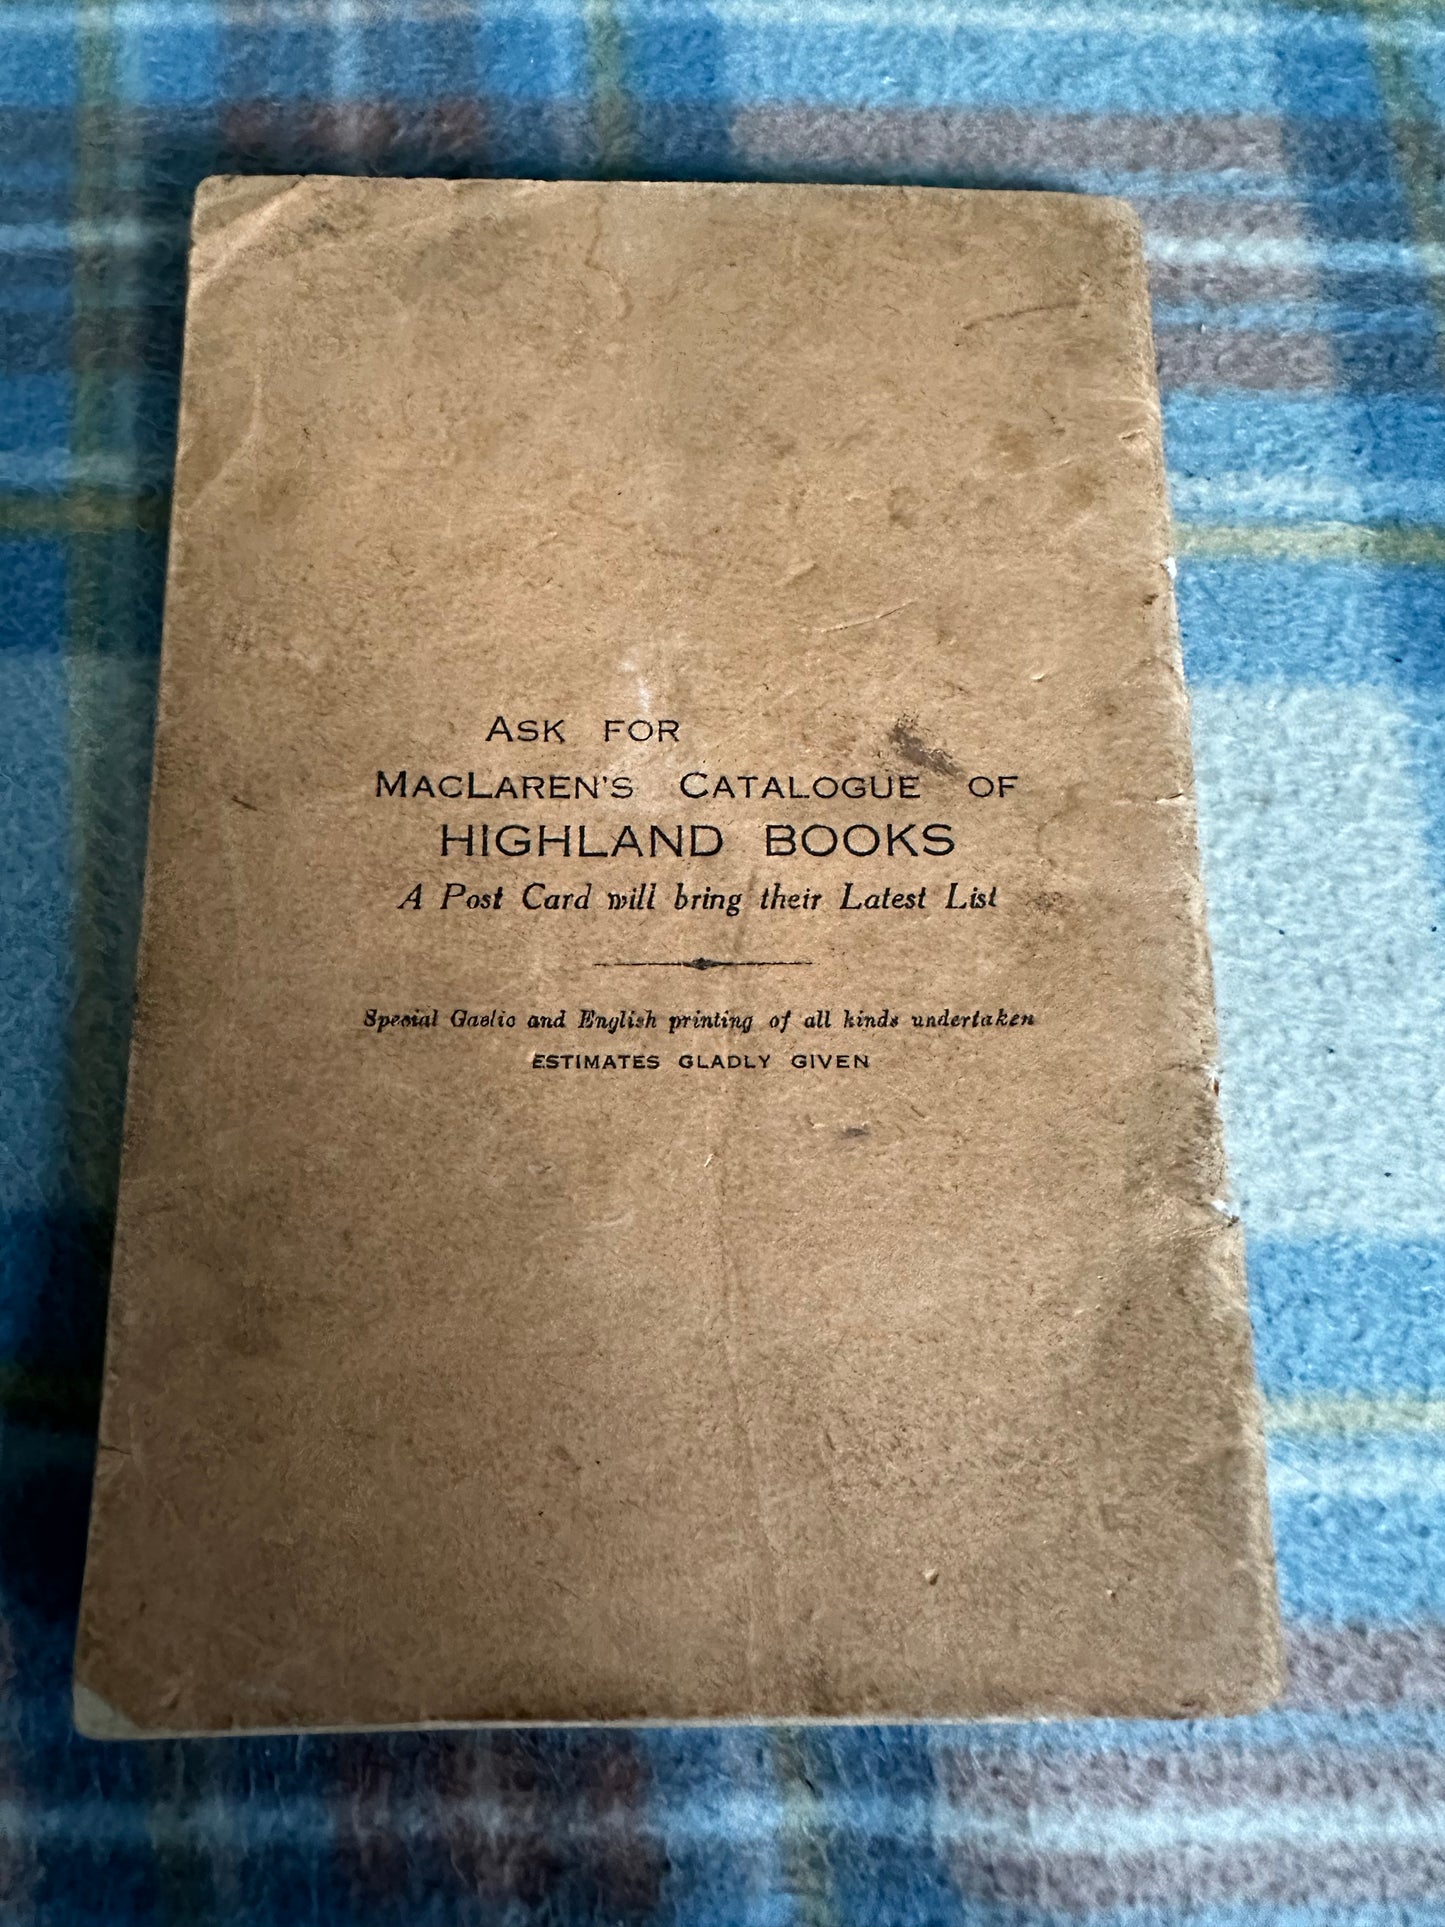 1946 Dain Spoirdail Le Dughall Bochanan(Spiritual Songs of Dugald Buchanan(Alex MacLaren & Sons Publisher) Gaelic language